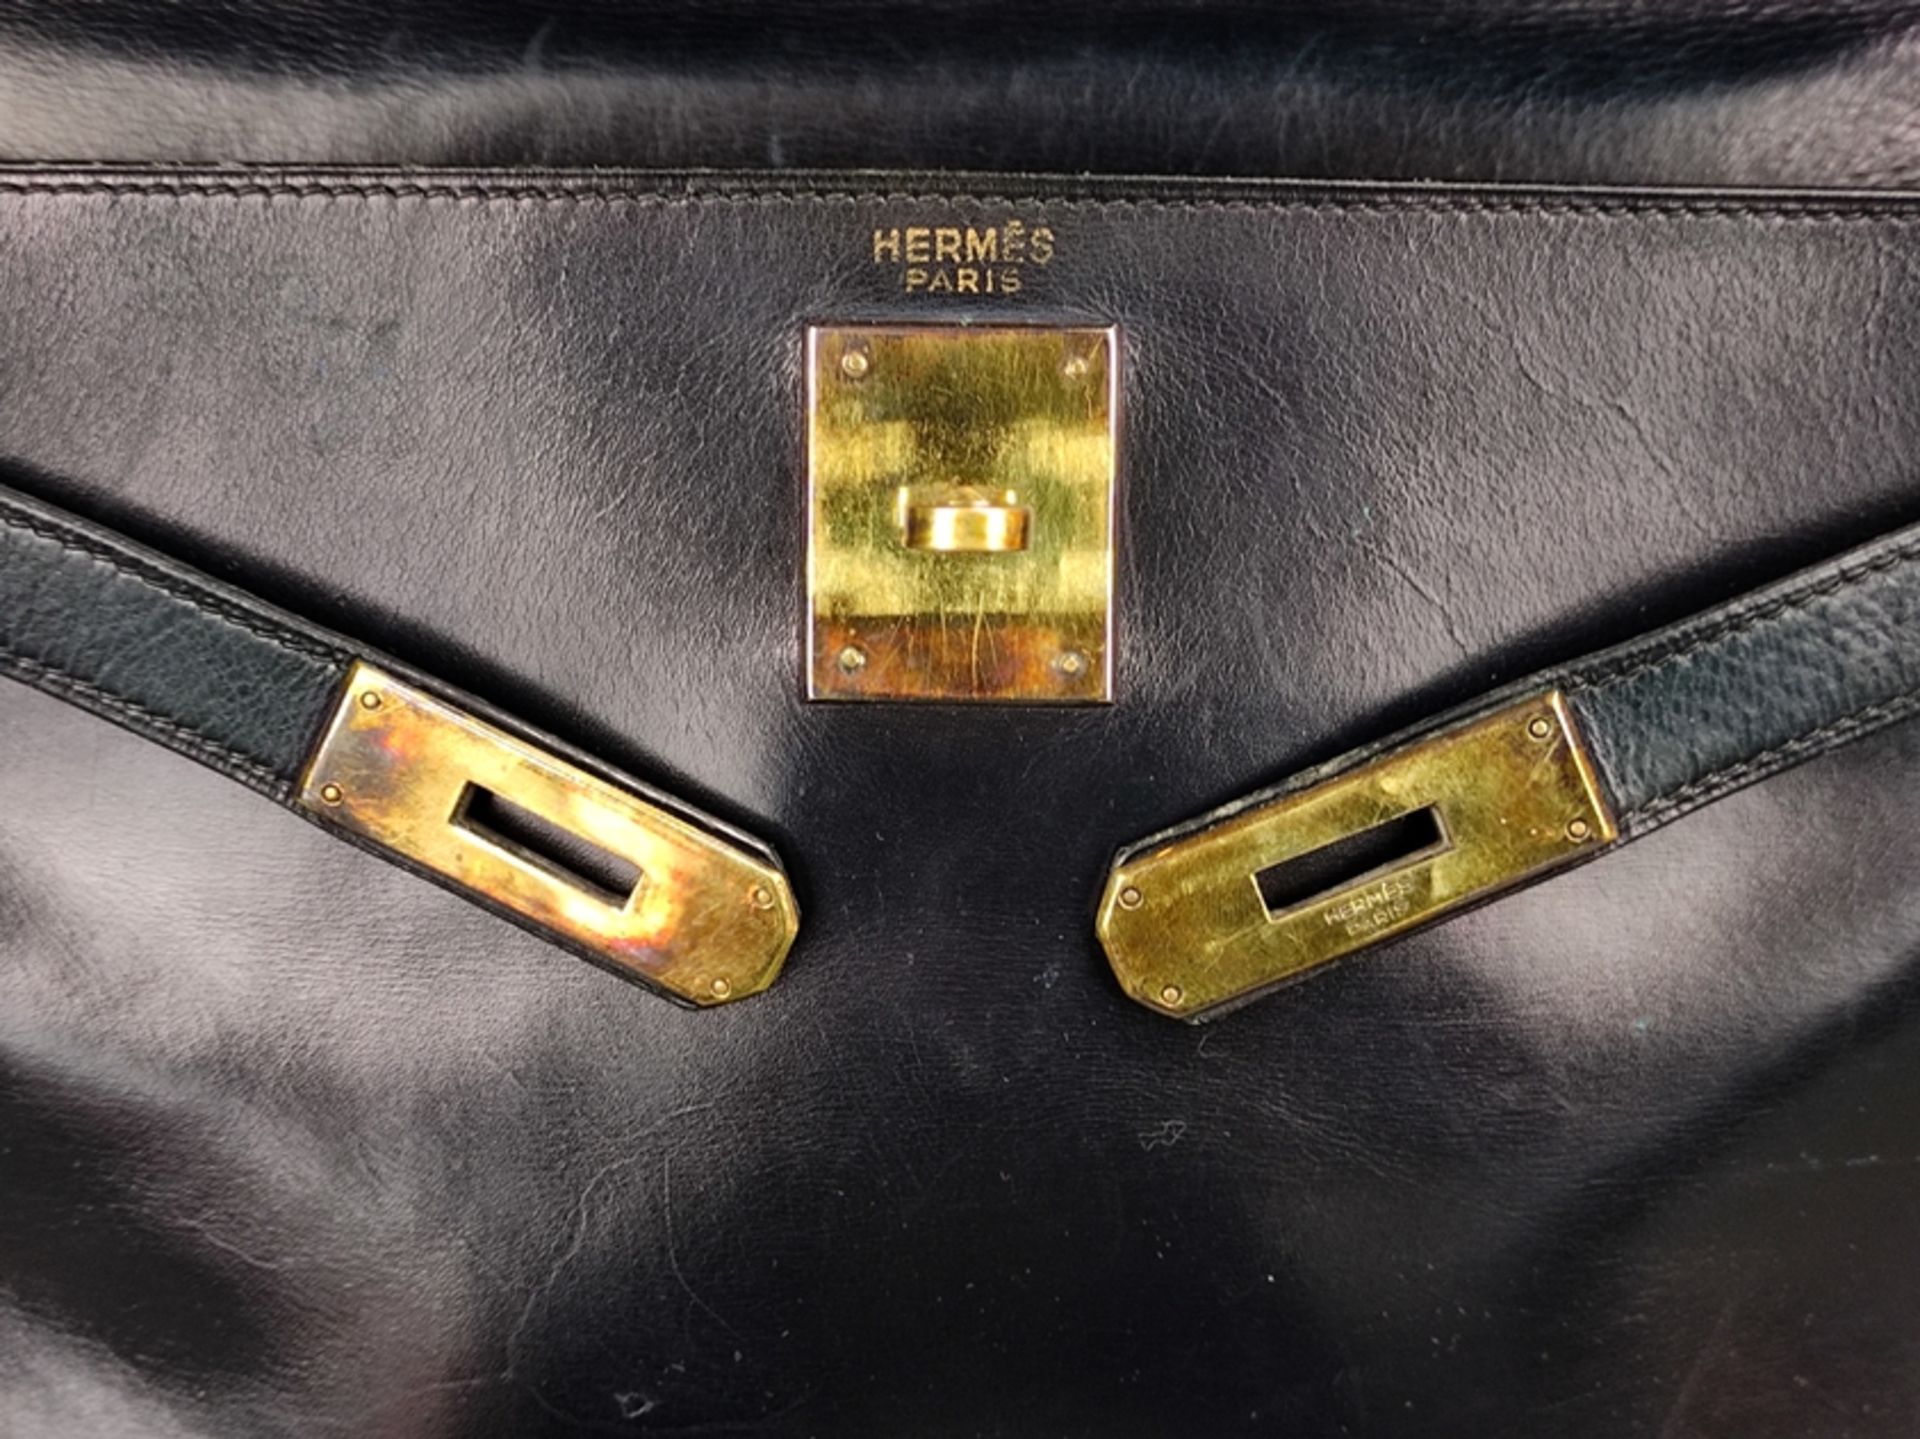 Hermes/ HERMÈS vintage handbag "Kelly Bag 32", 1958, dark blue - Image 4 of 6